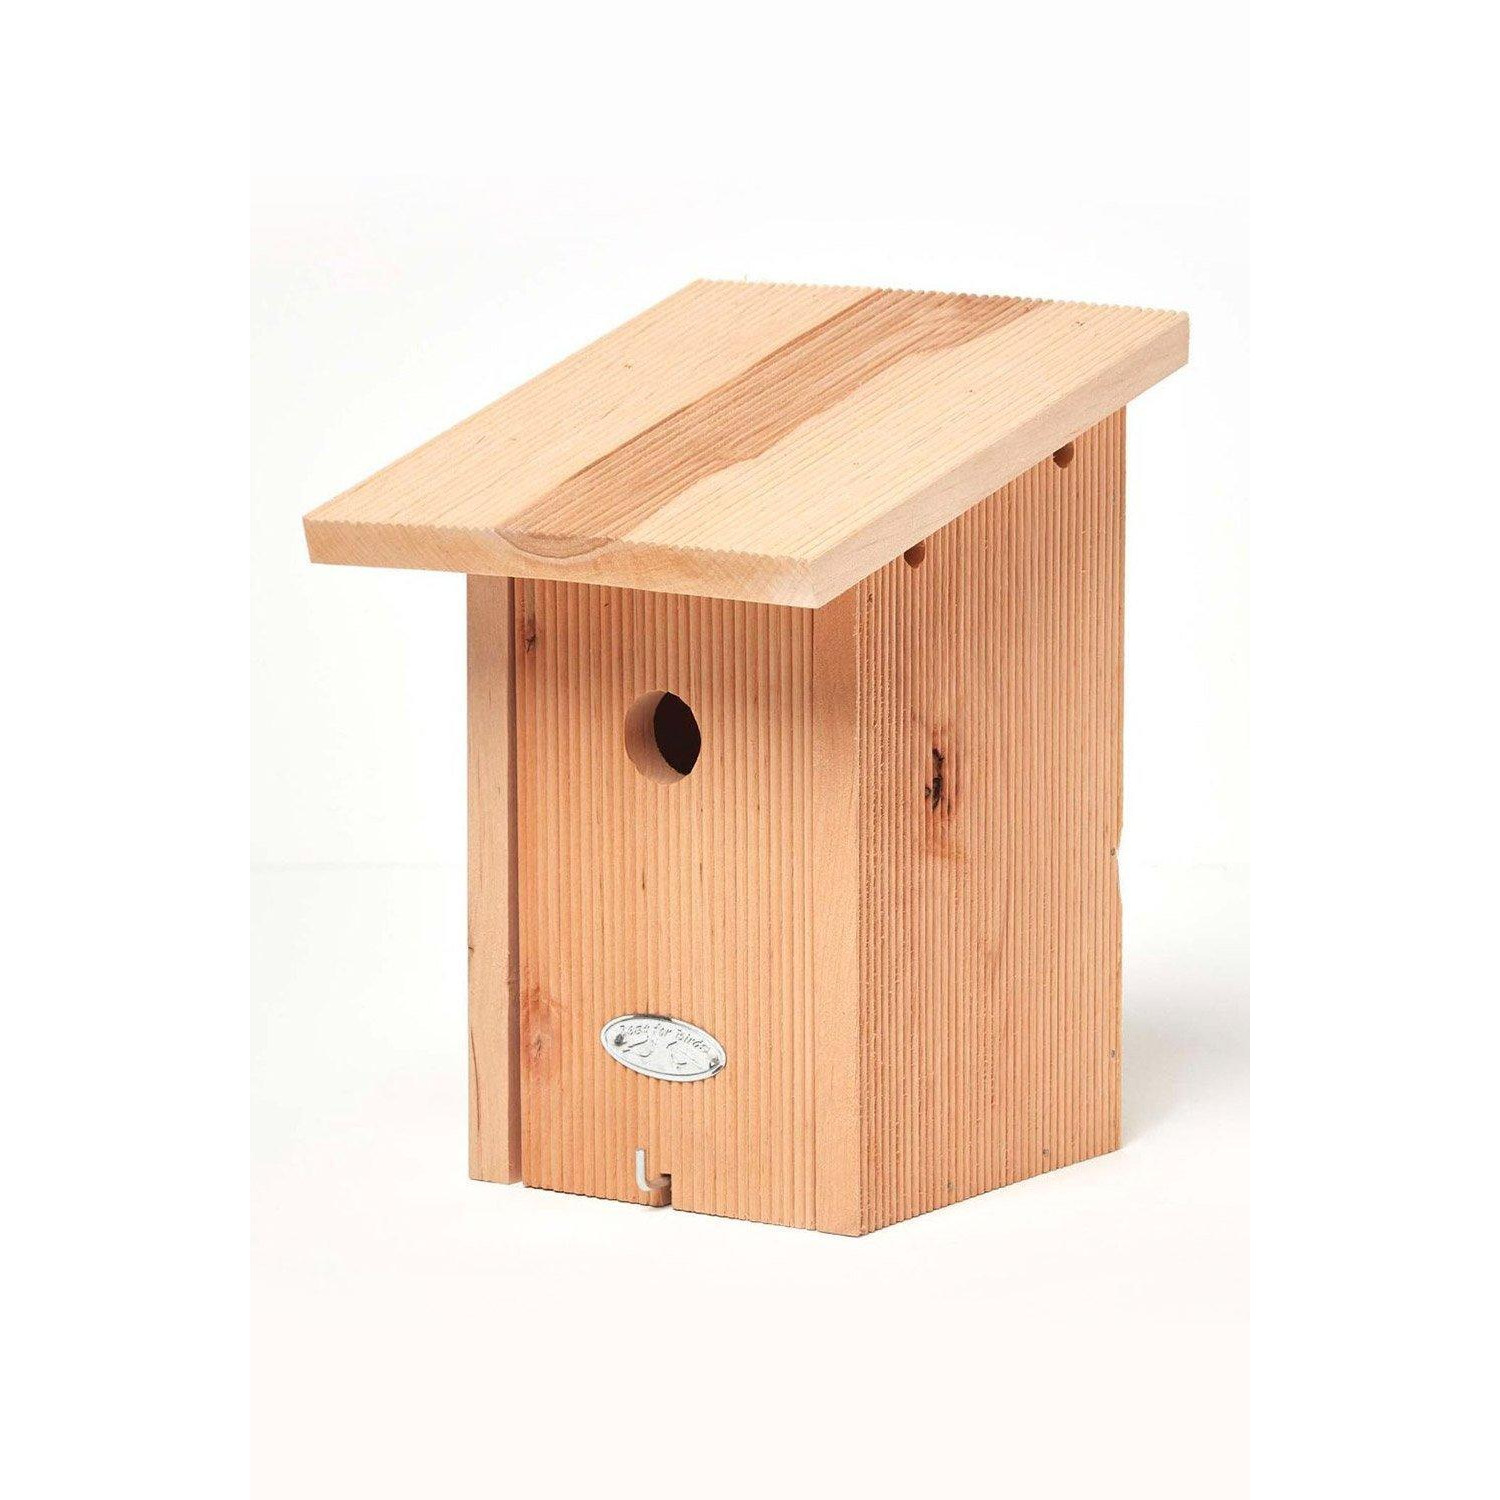 Real Wood Blue Tit Bird Box House - image 1